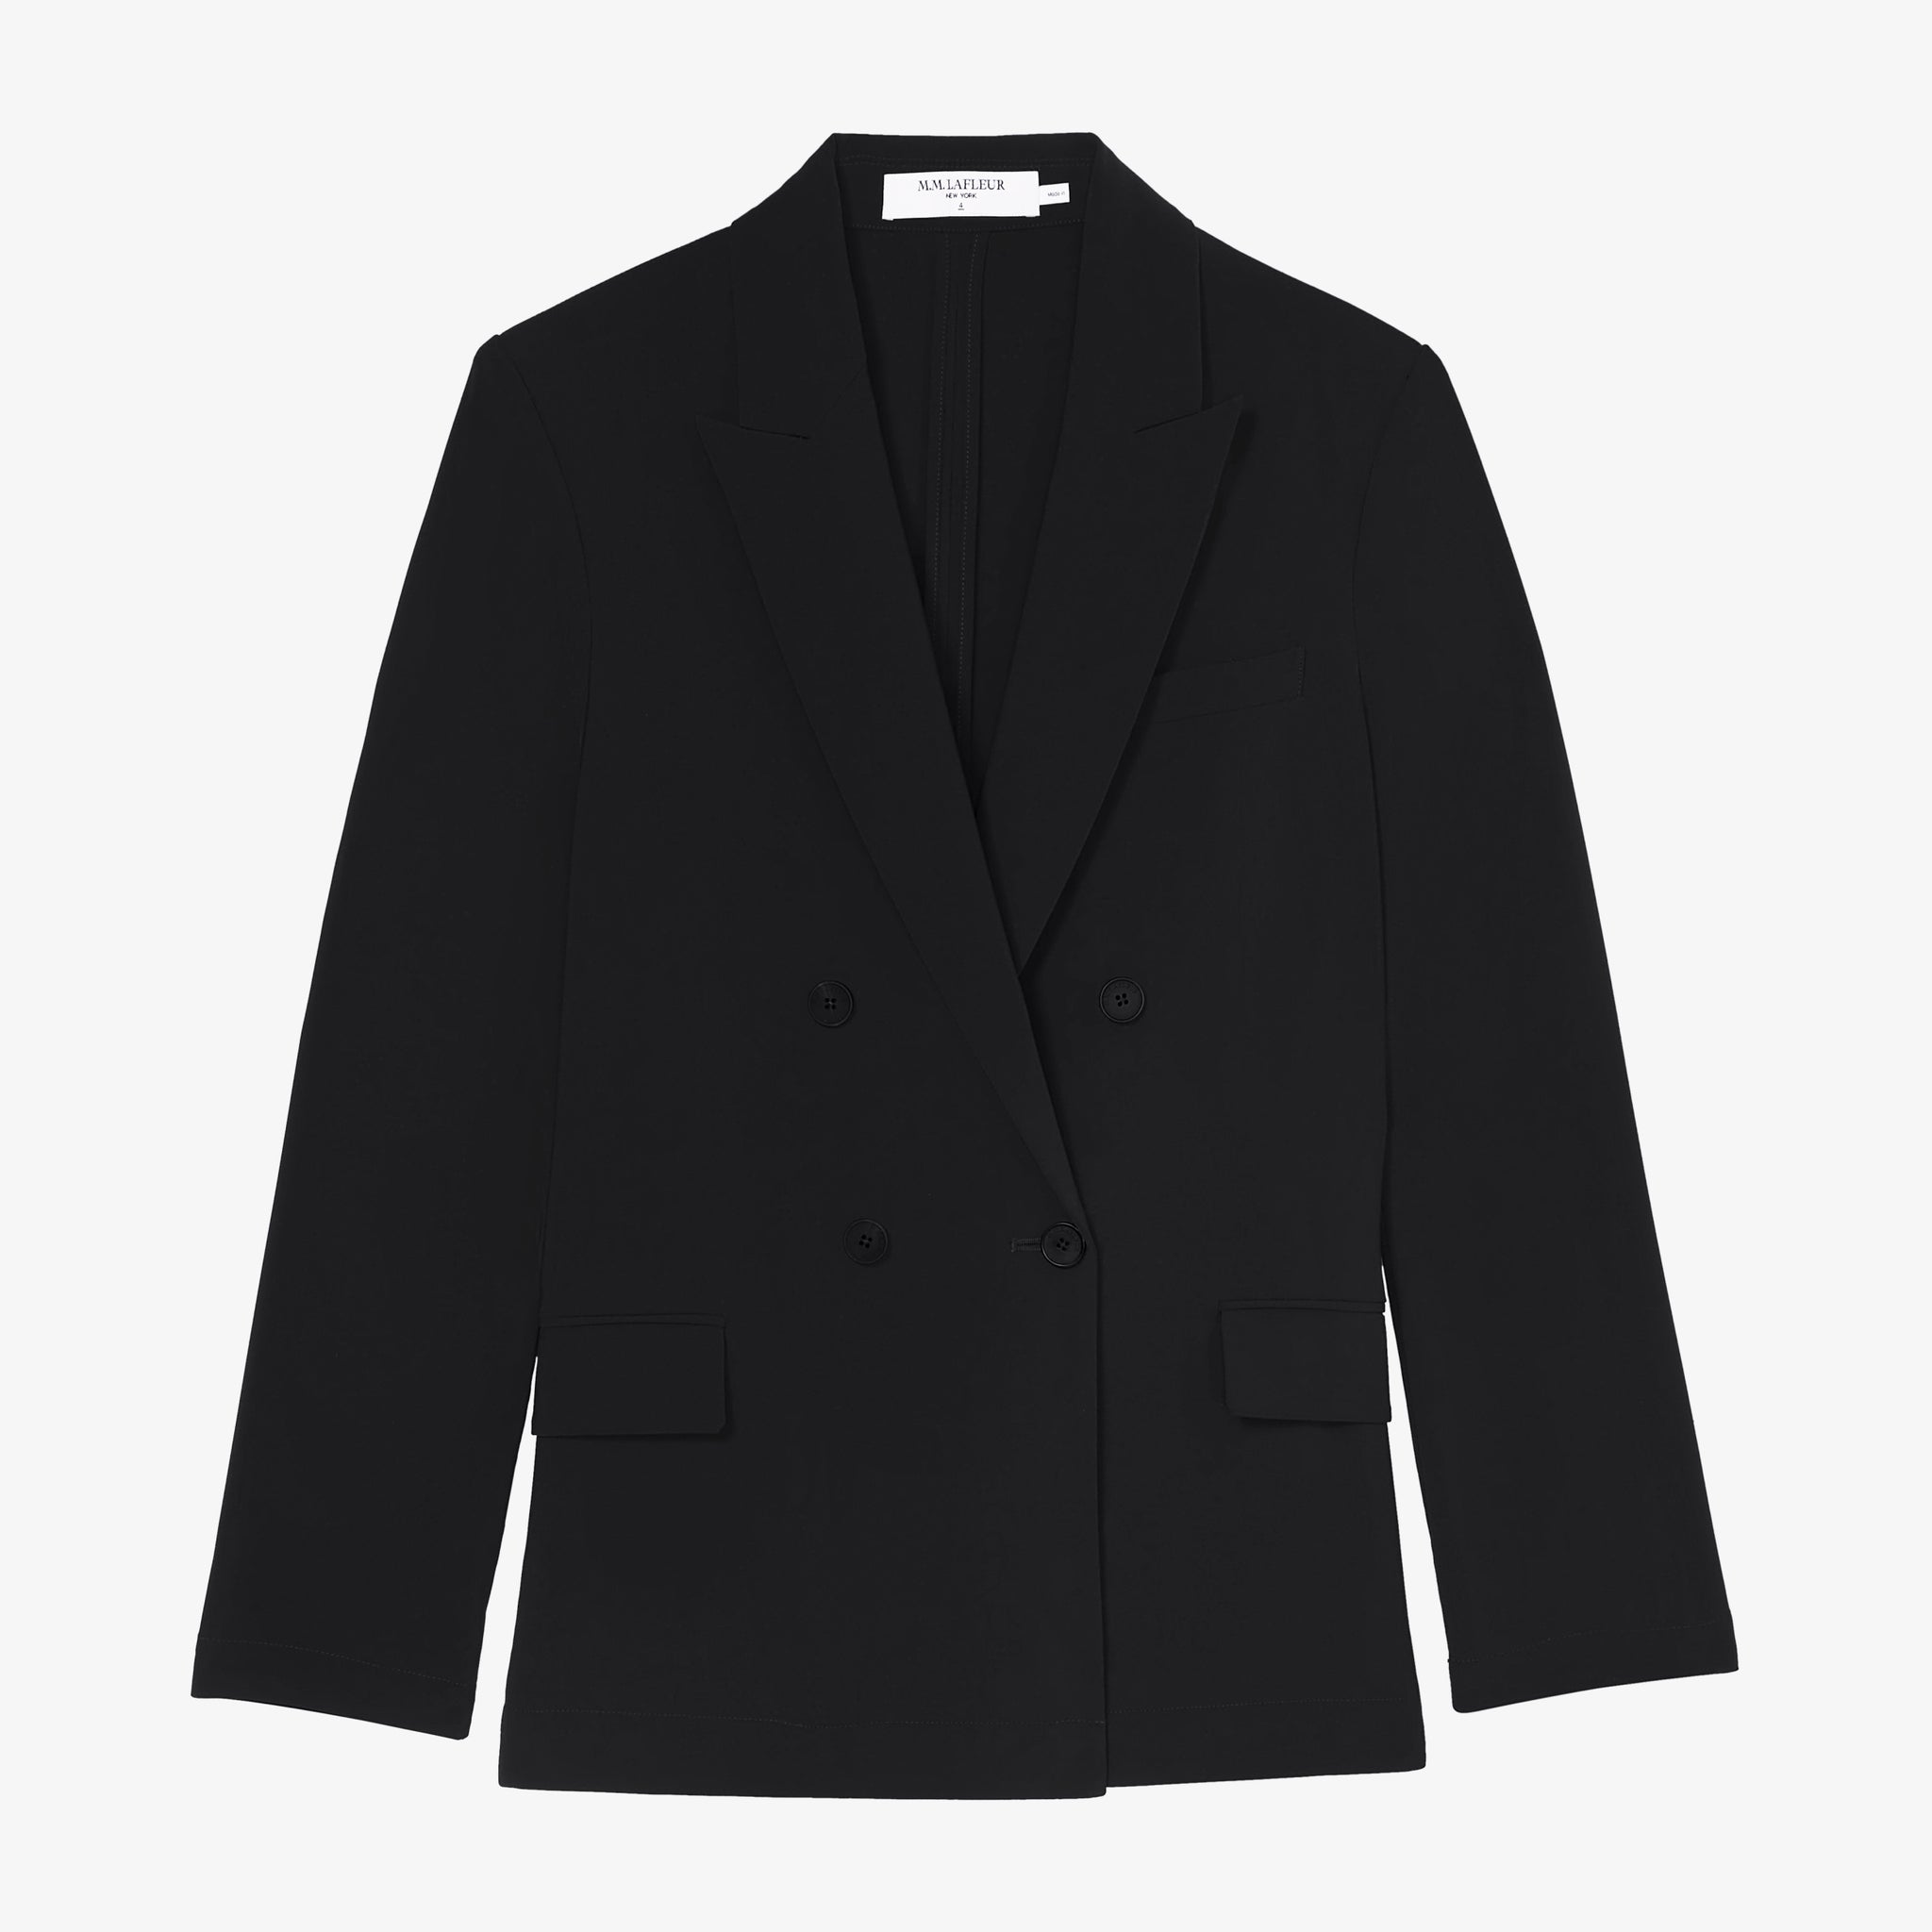 still image of the ohara jacket in black